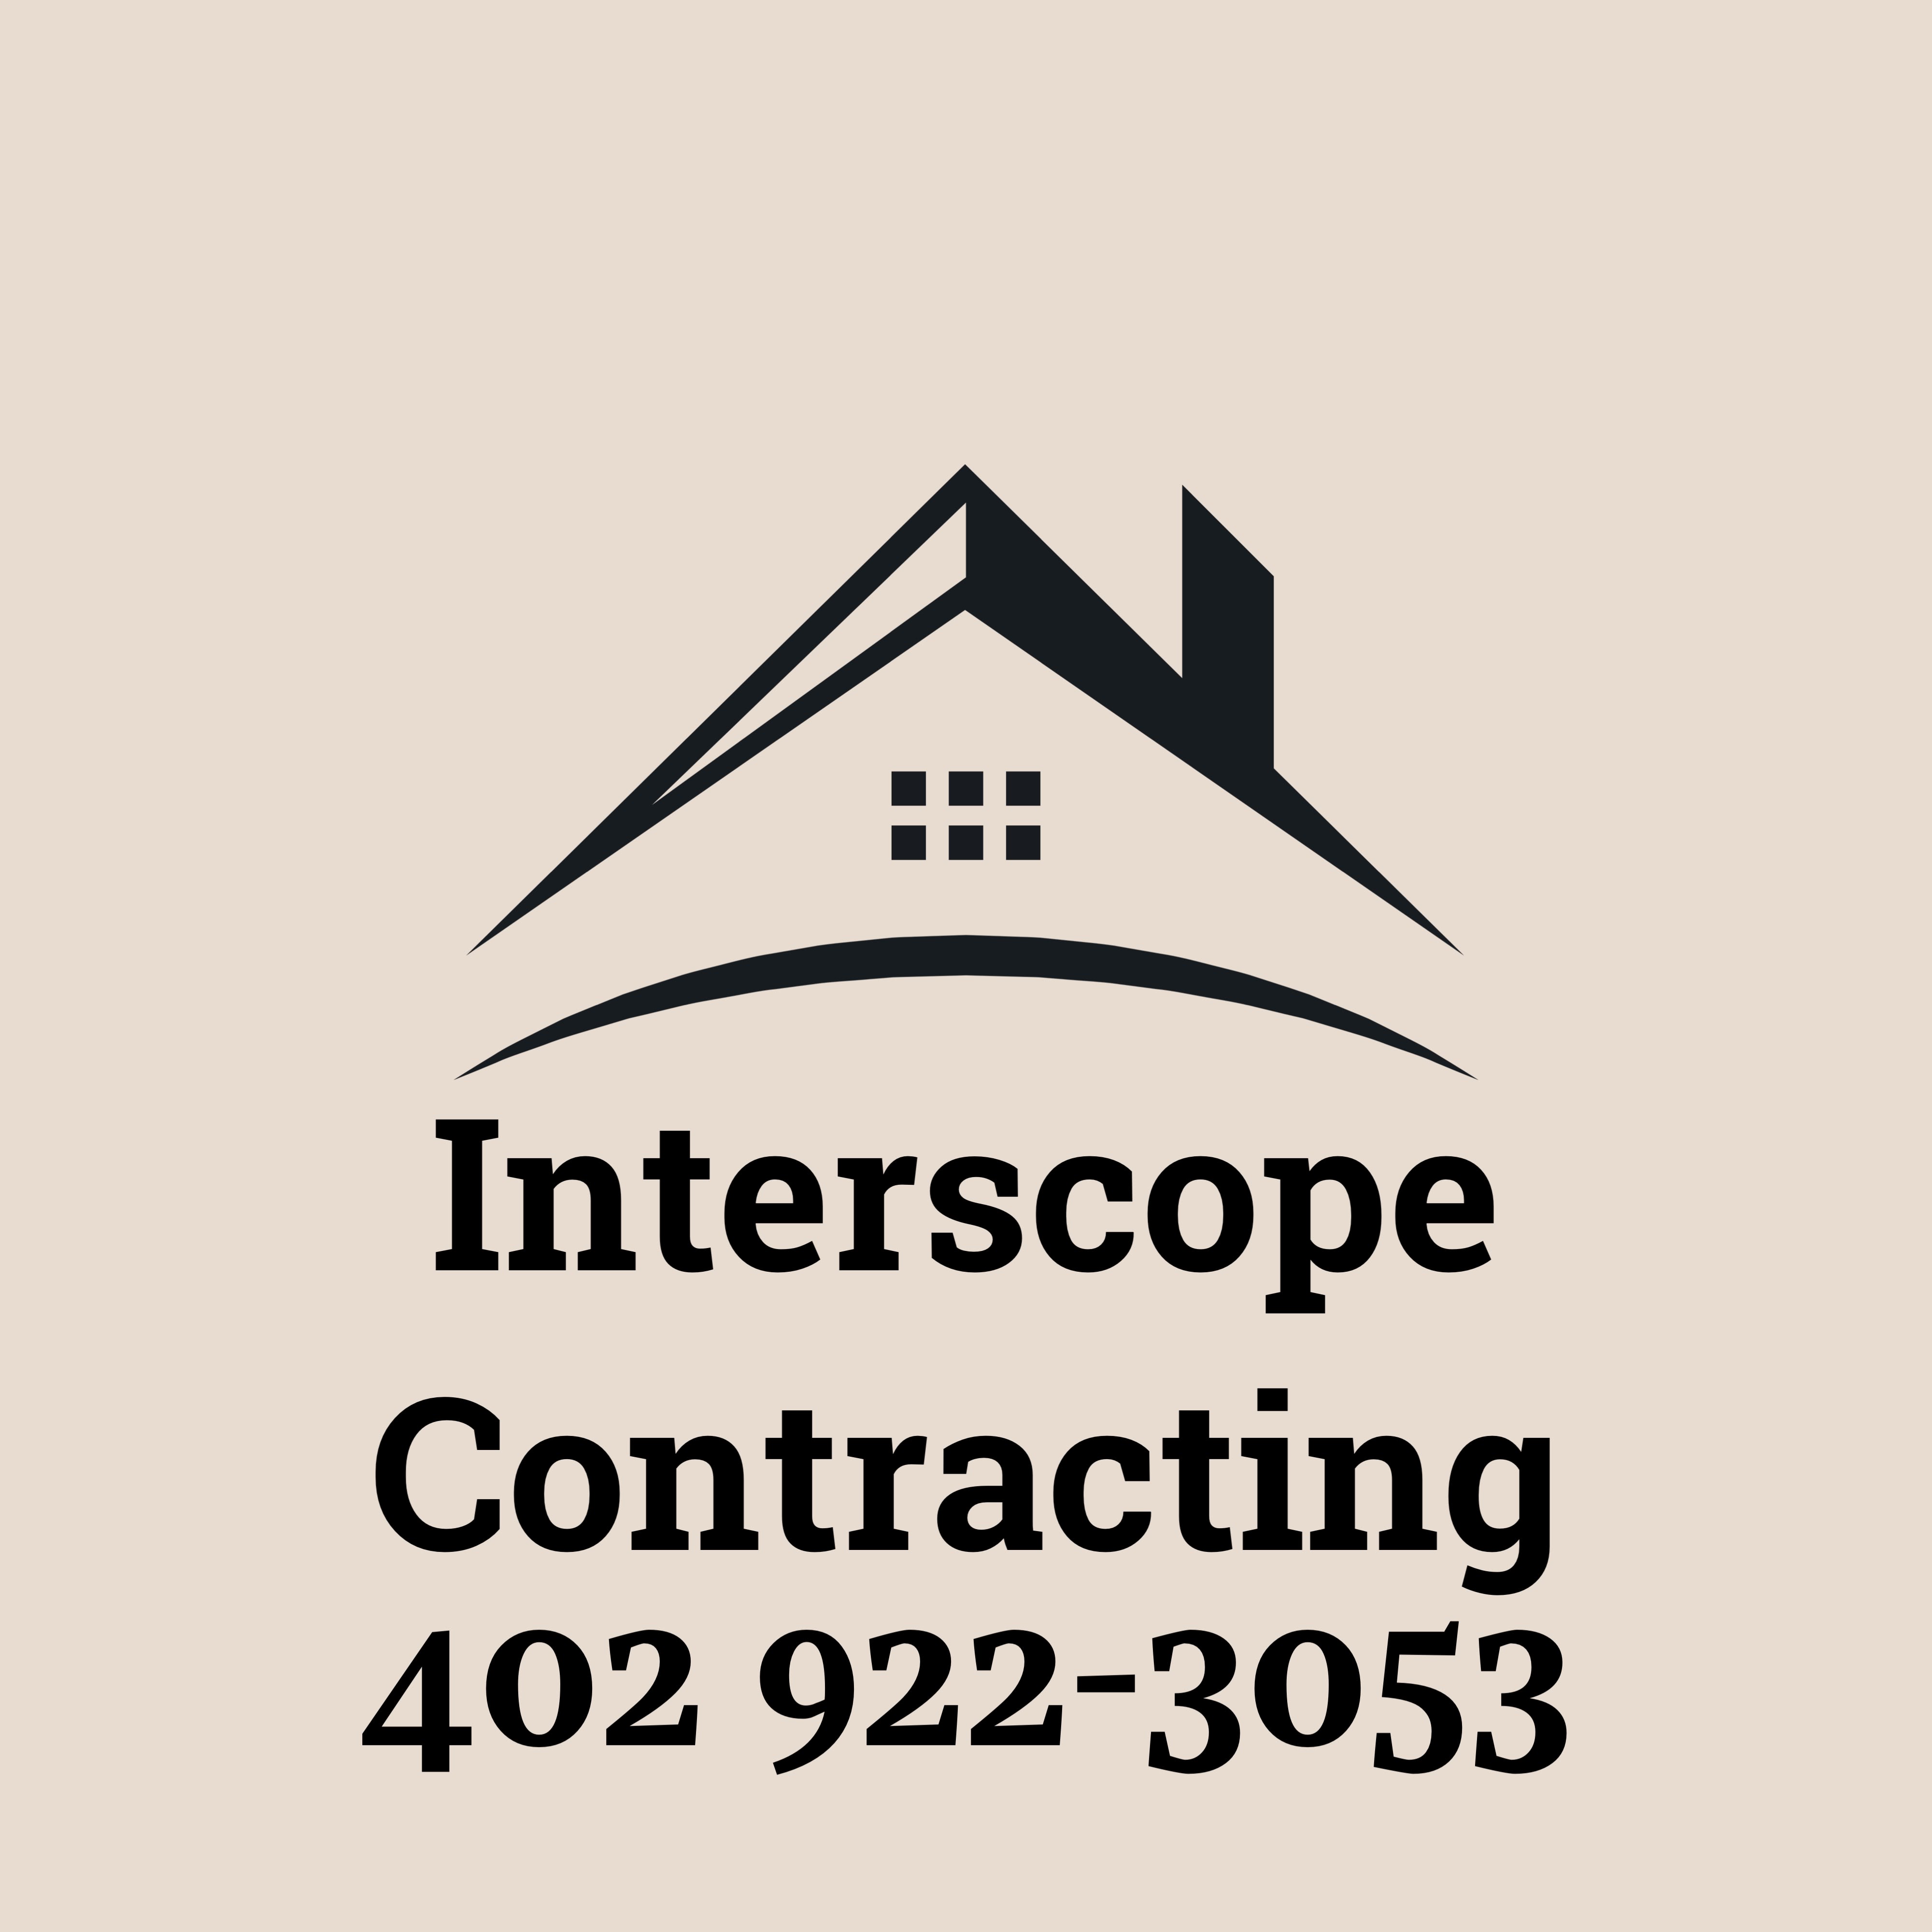 Interscope Contracting